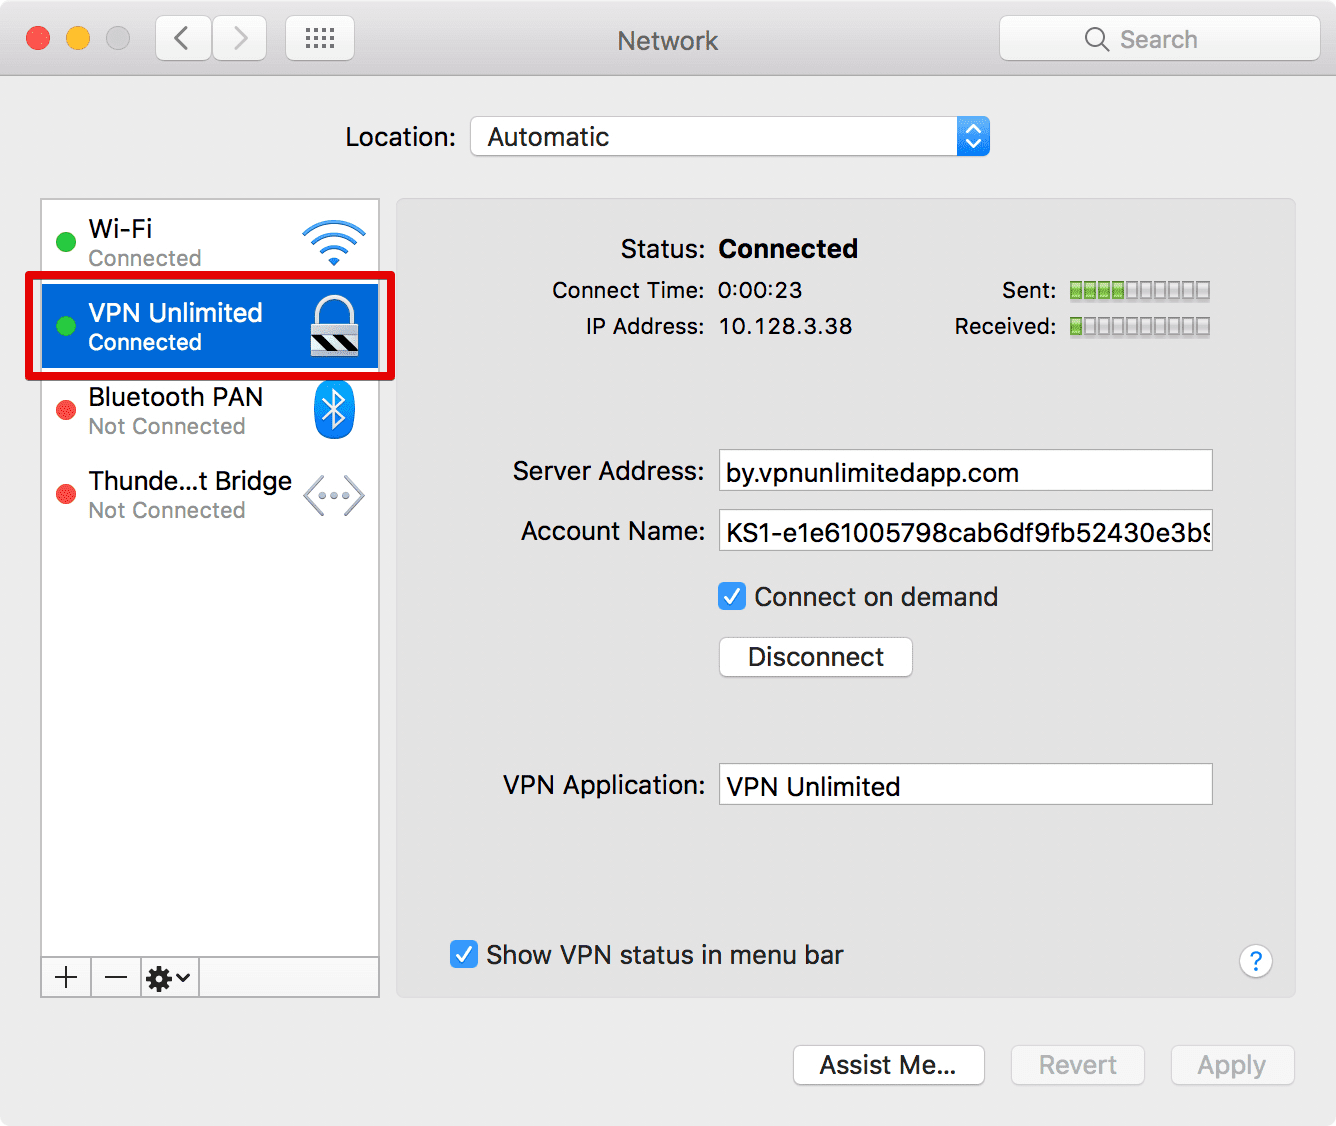 vpn software mac os x 10.5